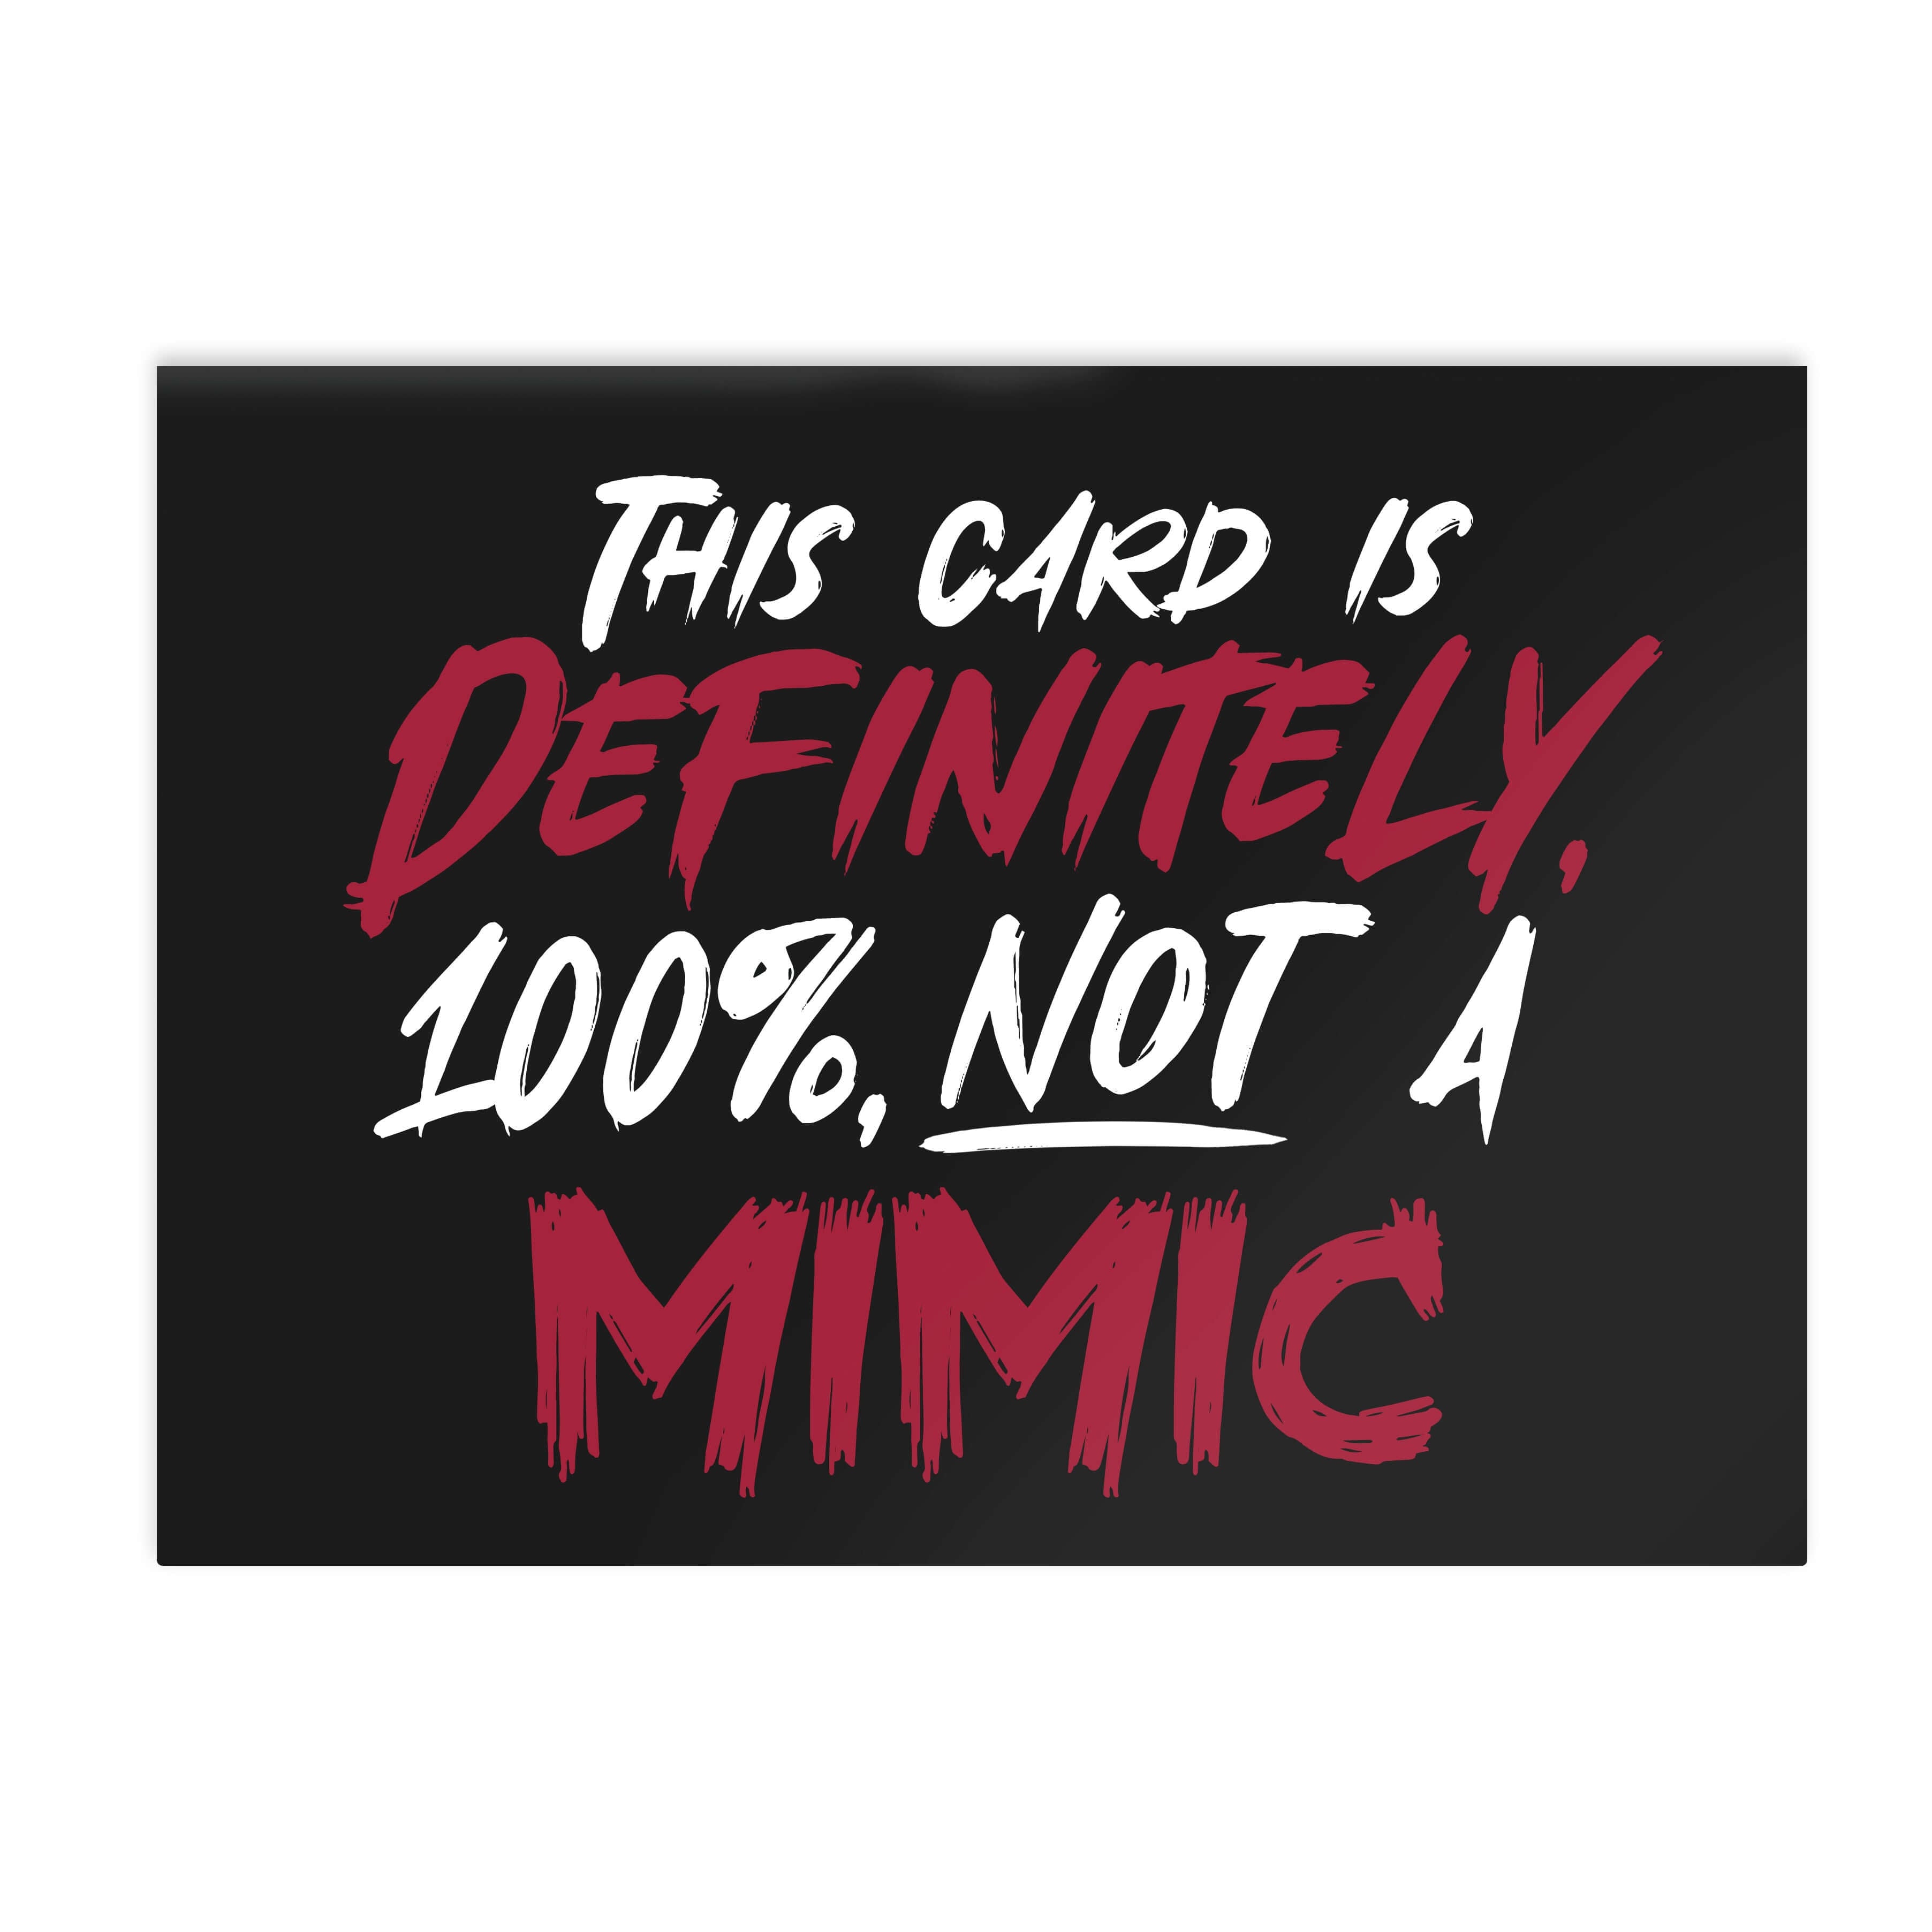 Not A Mimic Greeting Card